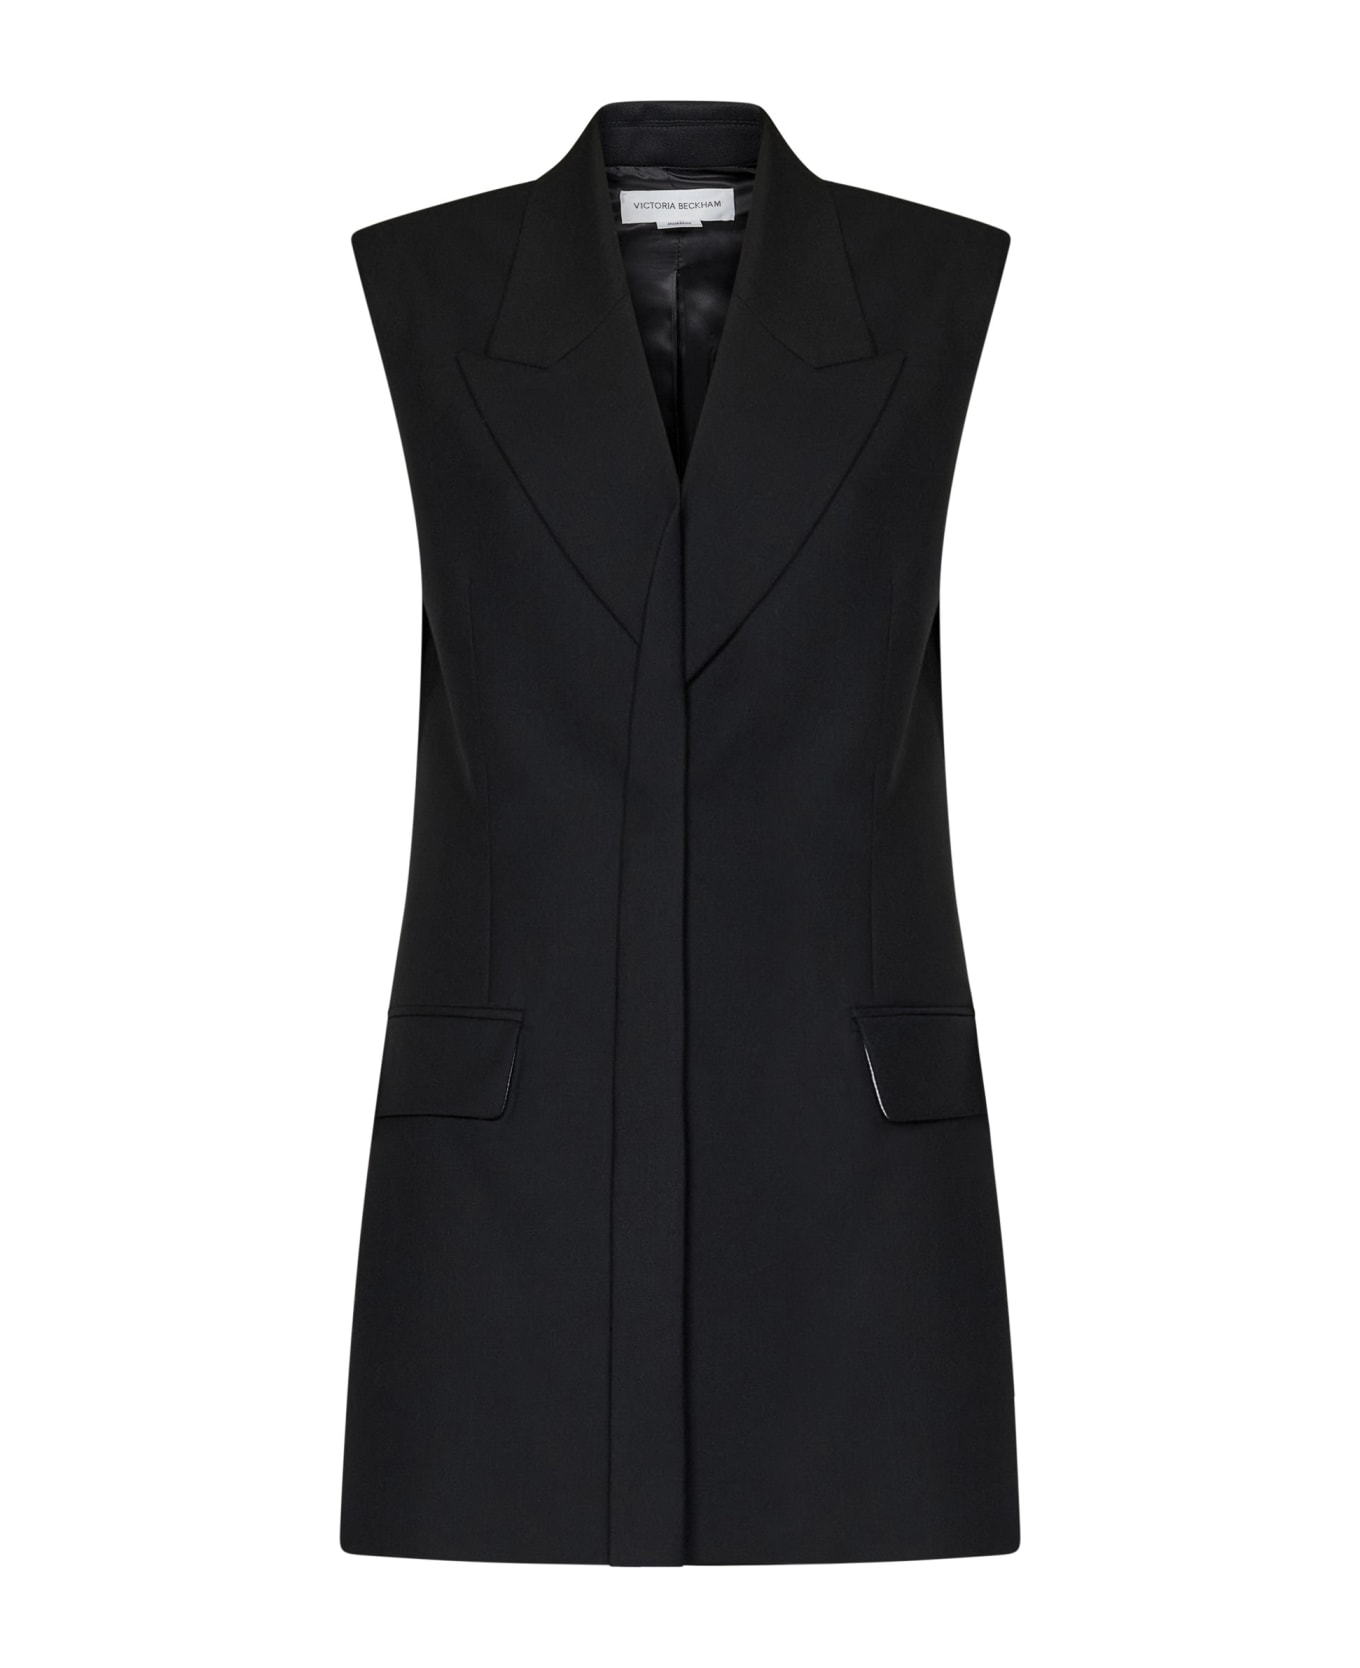 Victoria Beckham Sleeveless Tailored Dress Mini Dress - Black ベスト